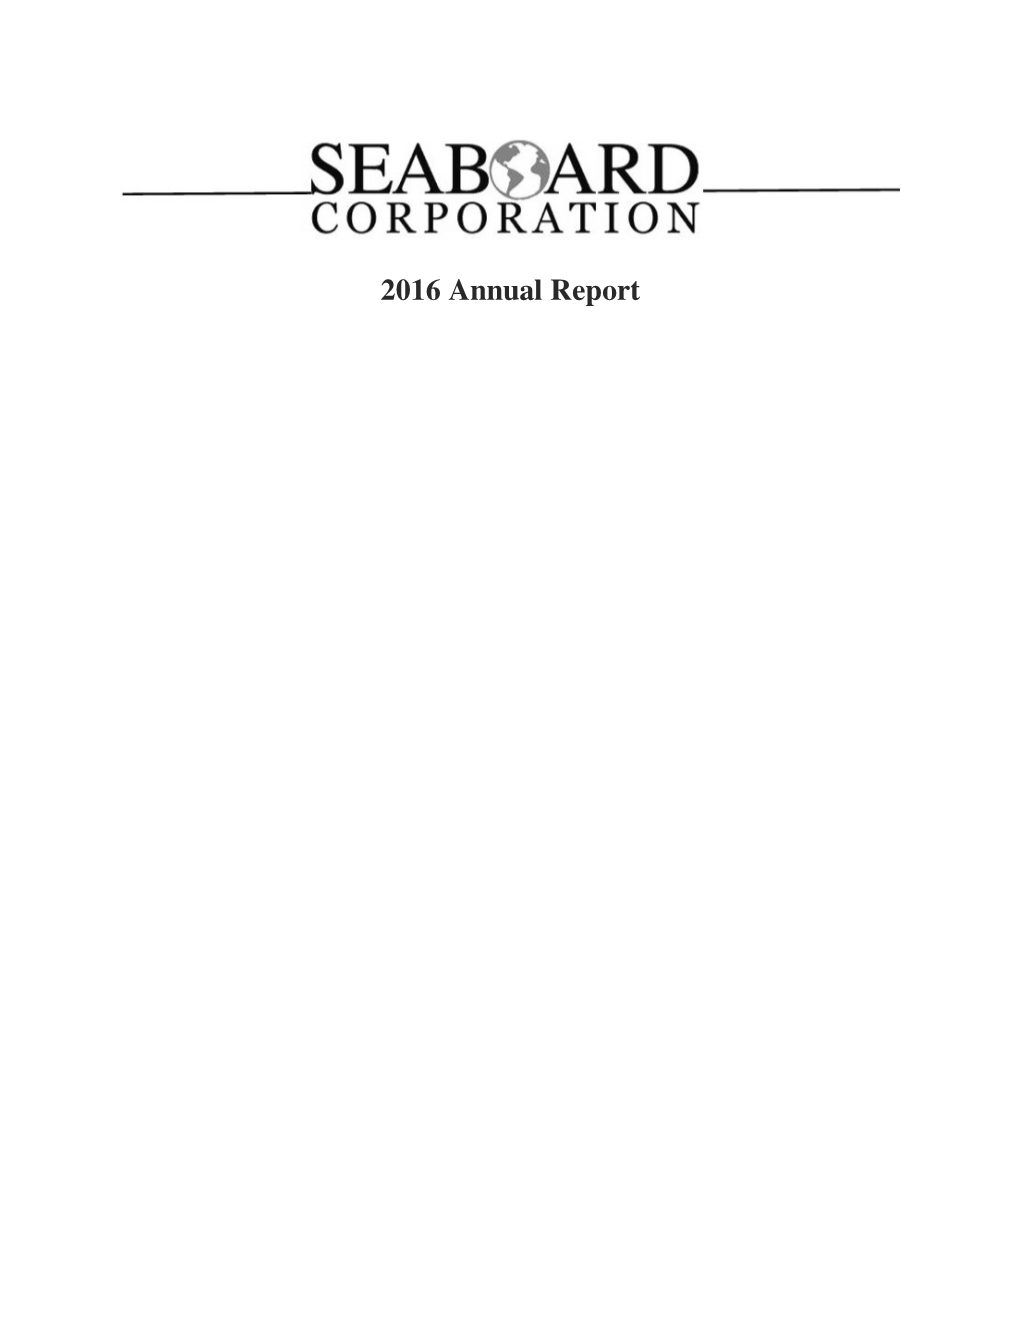 Seaboard Corporation 2016 Annual Report